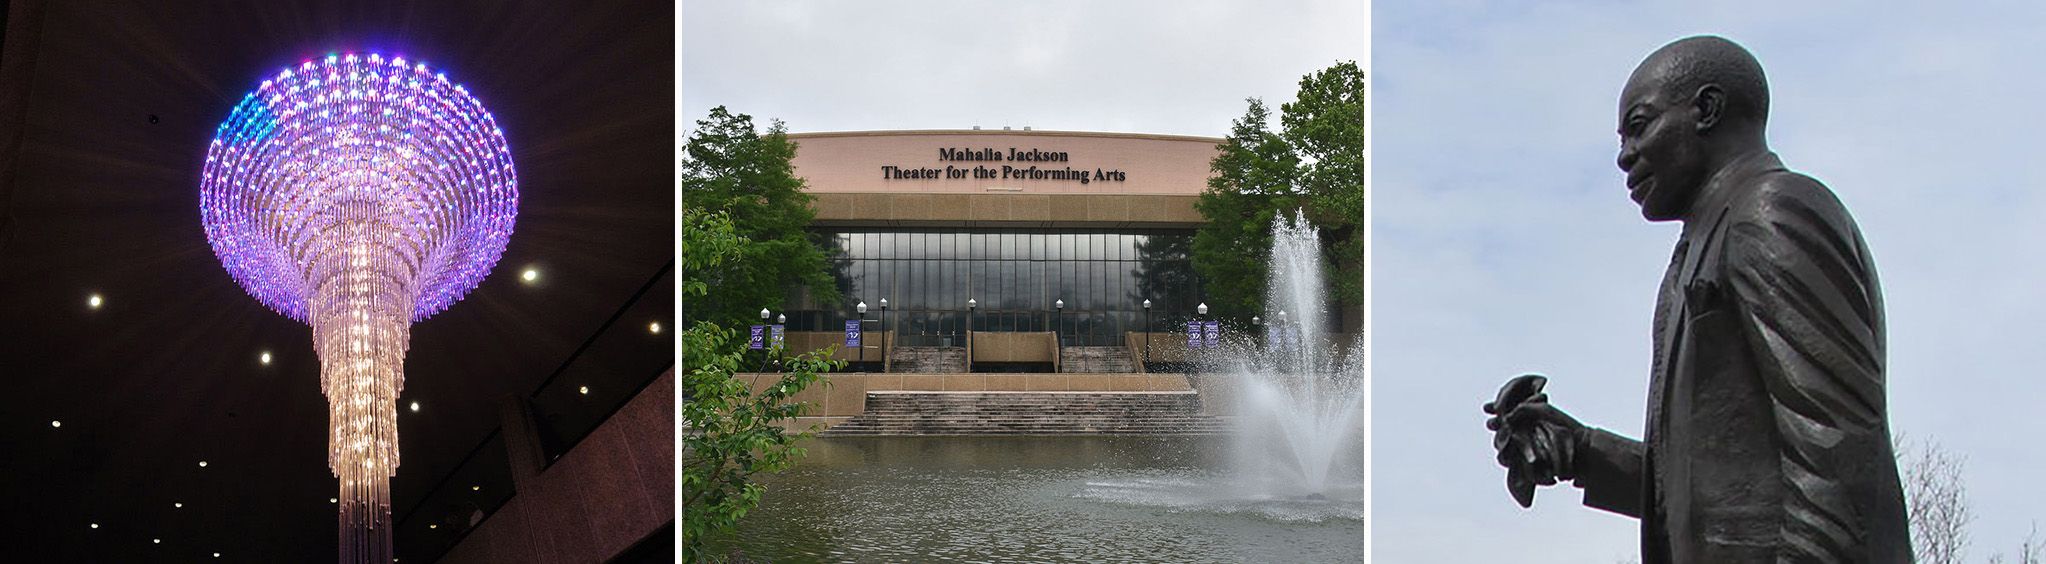 The Mahalia Jackson Theater of the Performing Arts